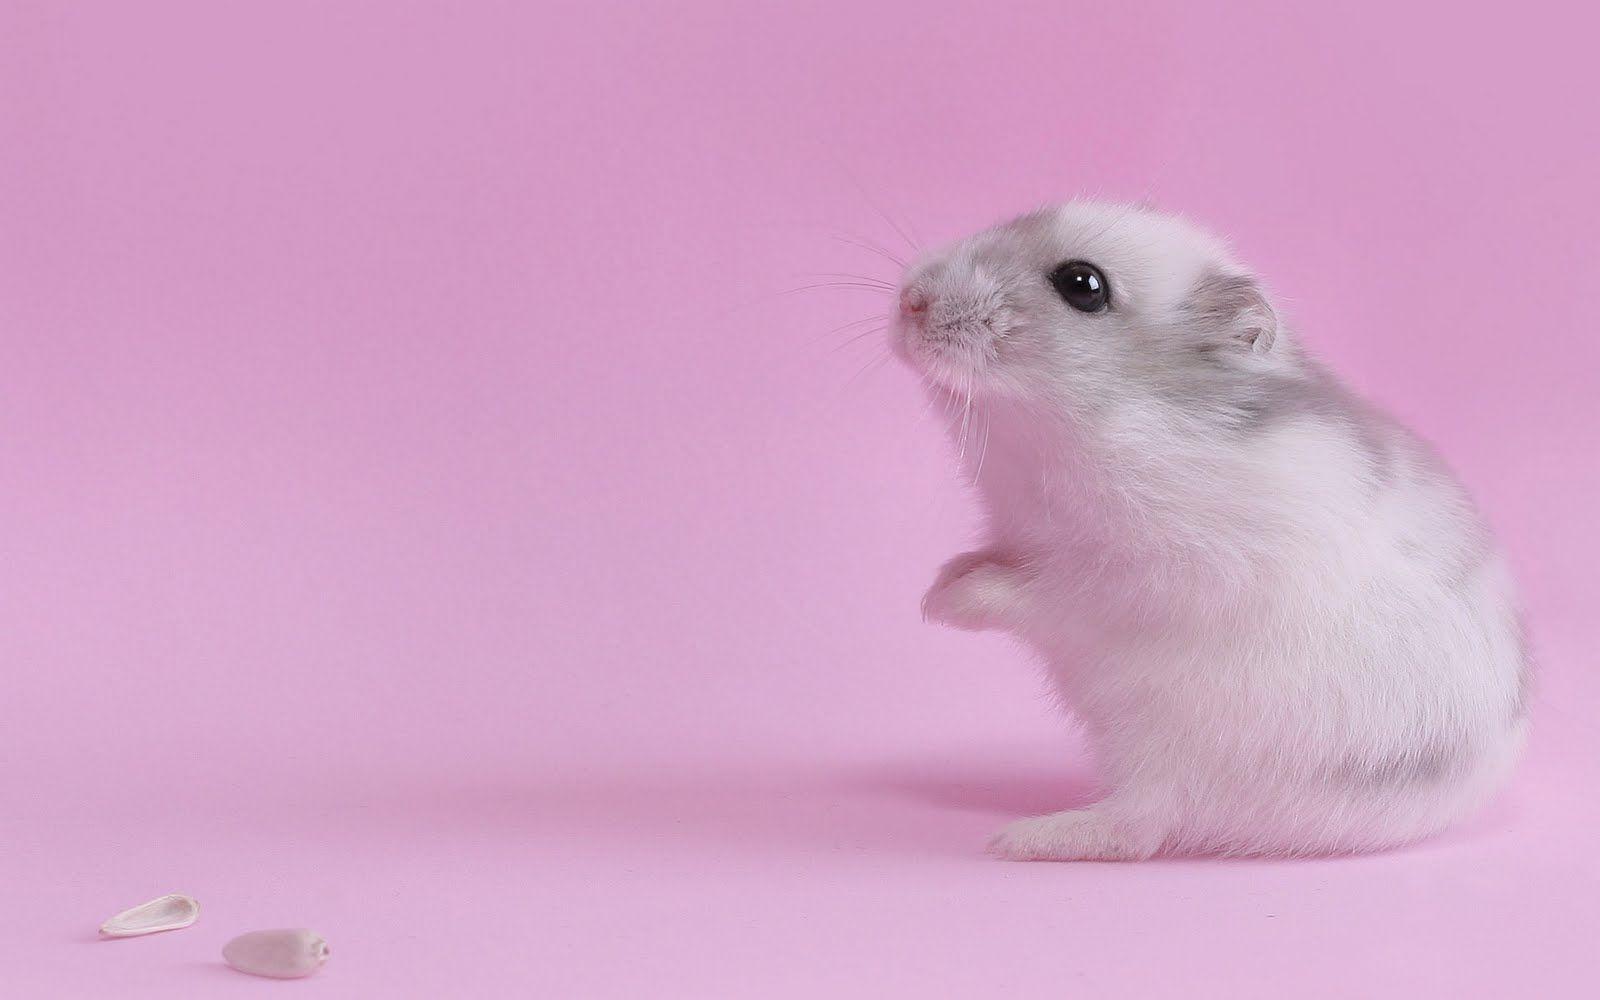 Fonds d&Hamster : tous les wallpapers Hamster